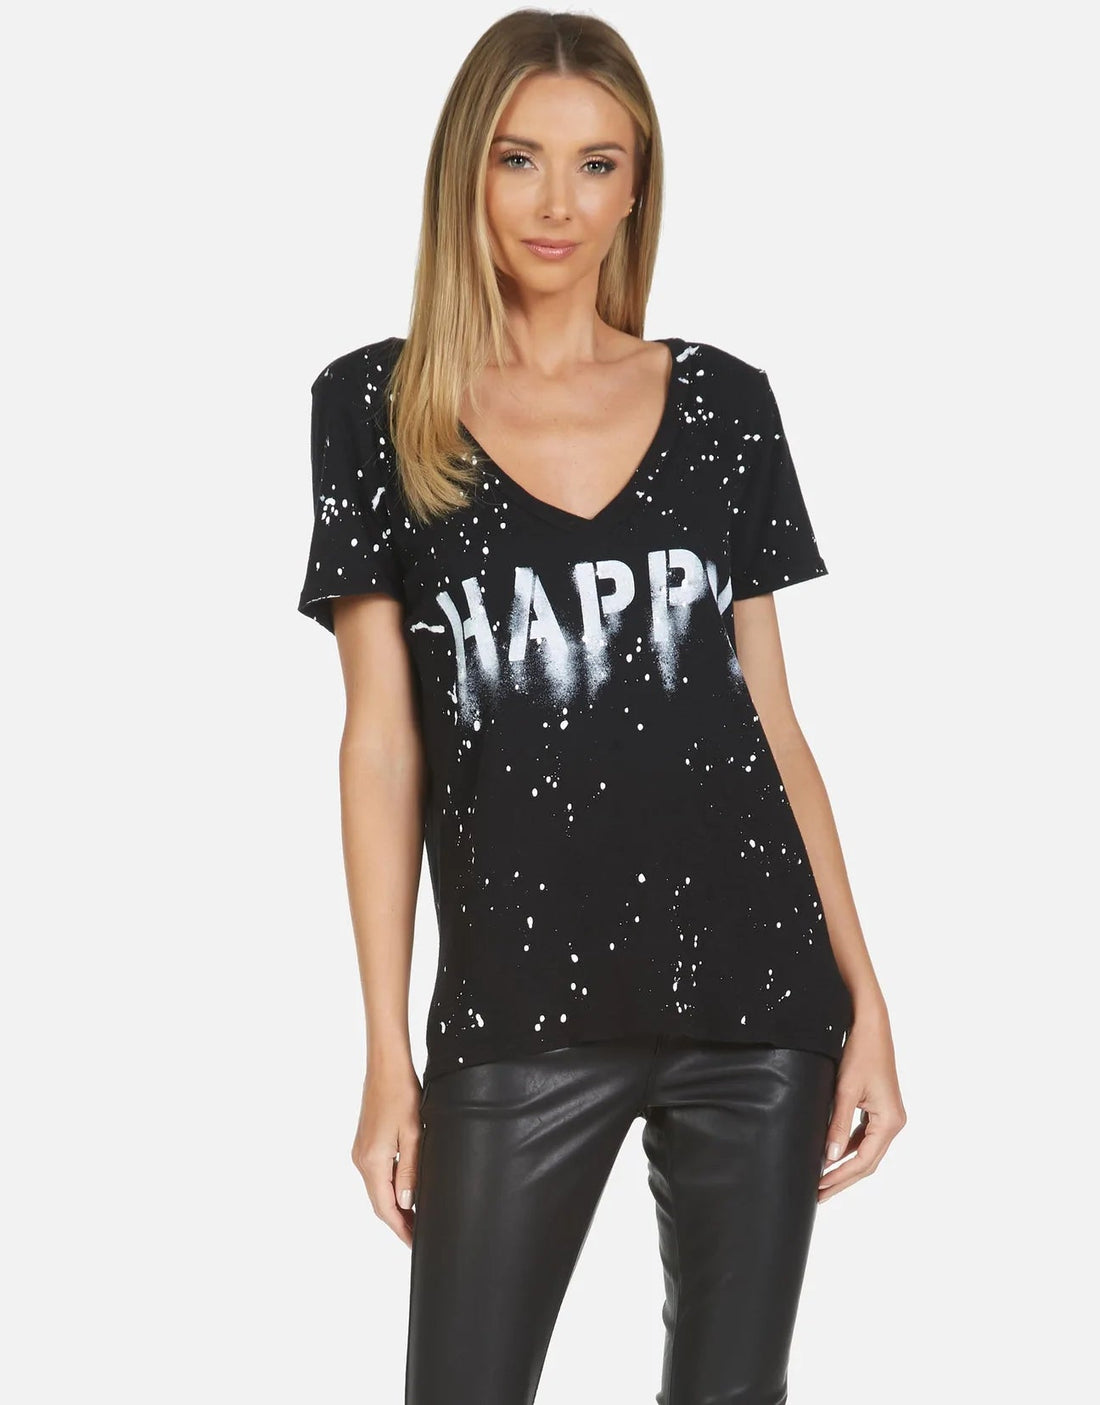 Shop Lauren Moshi Cruz Airbrush Happy T-Shirt - Premium T-Shirt from Lauren Moshi Online now at Spoiled Brat 